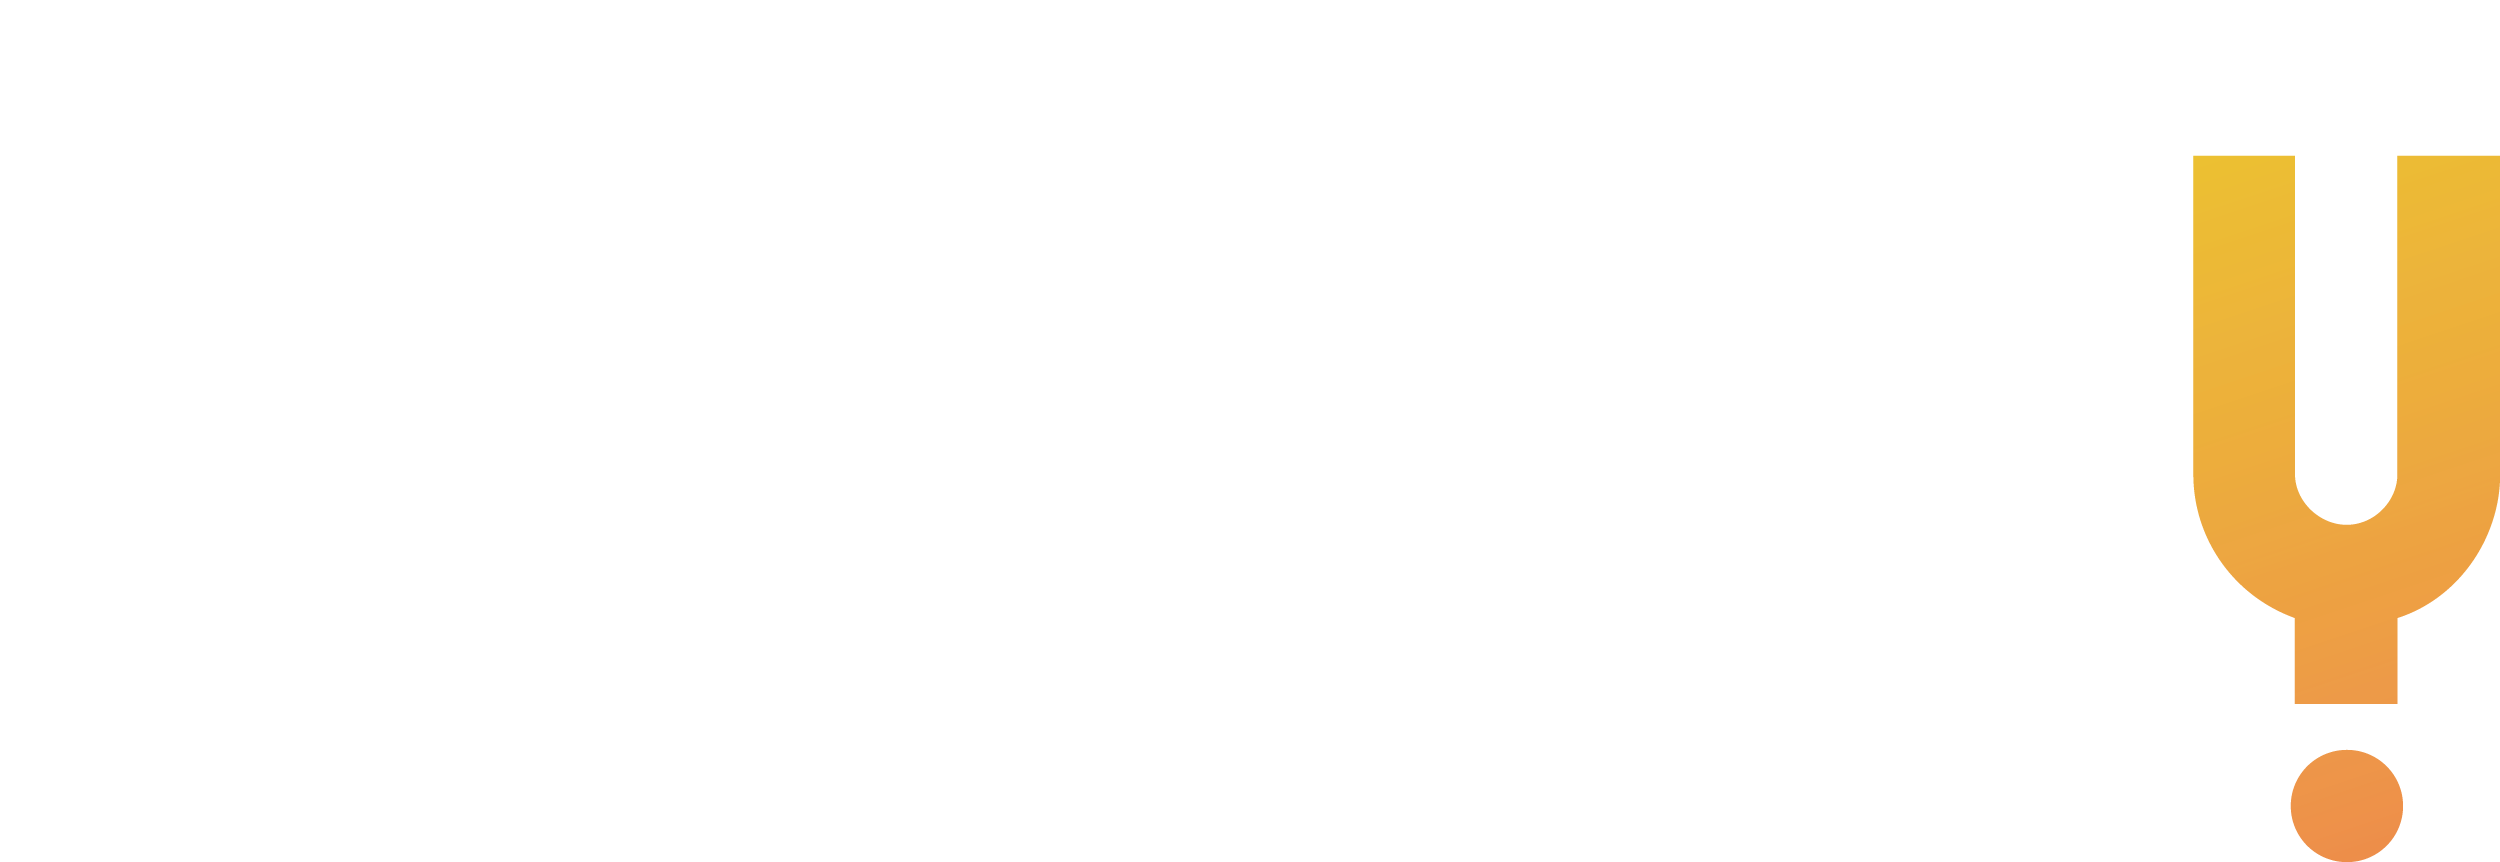 Curisosity Stream logo